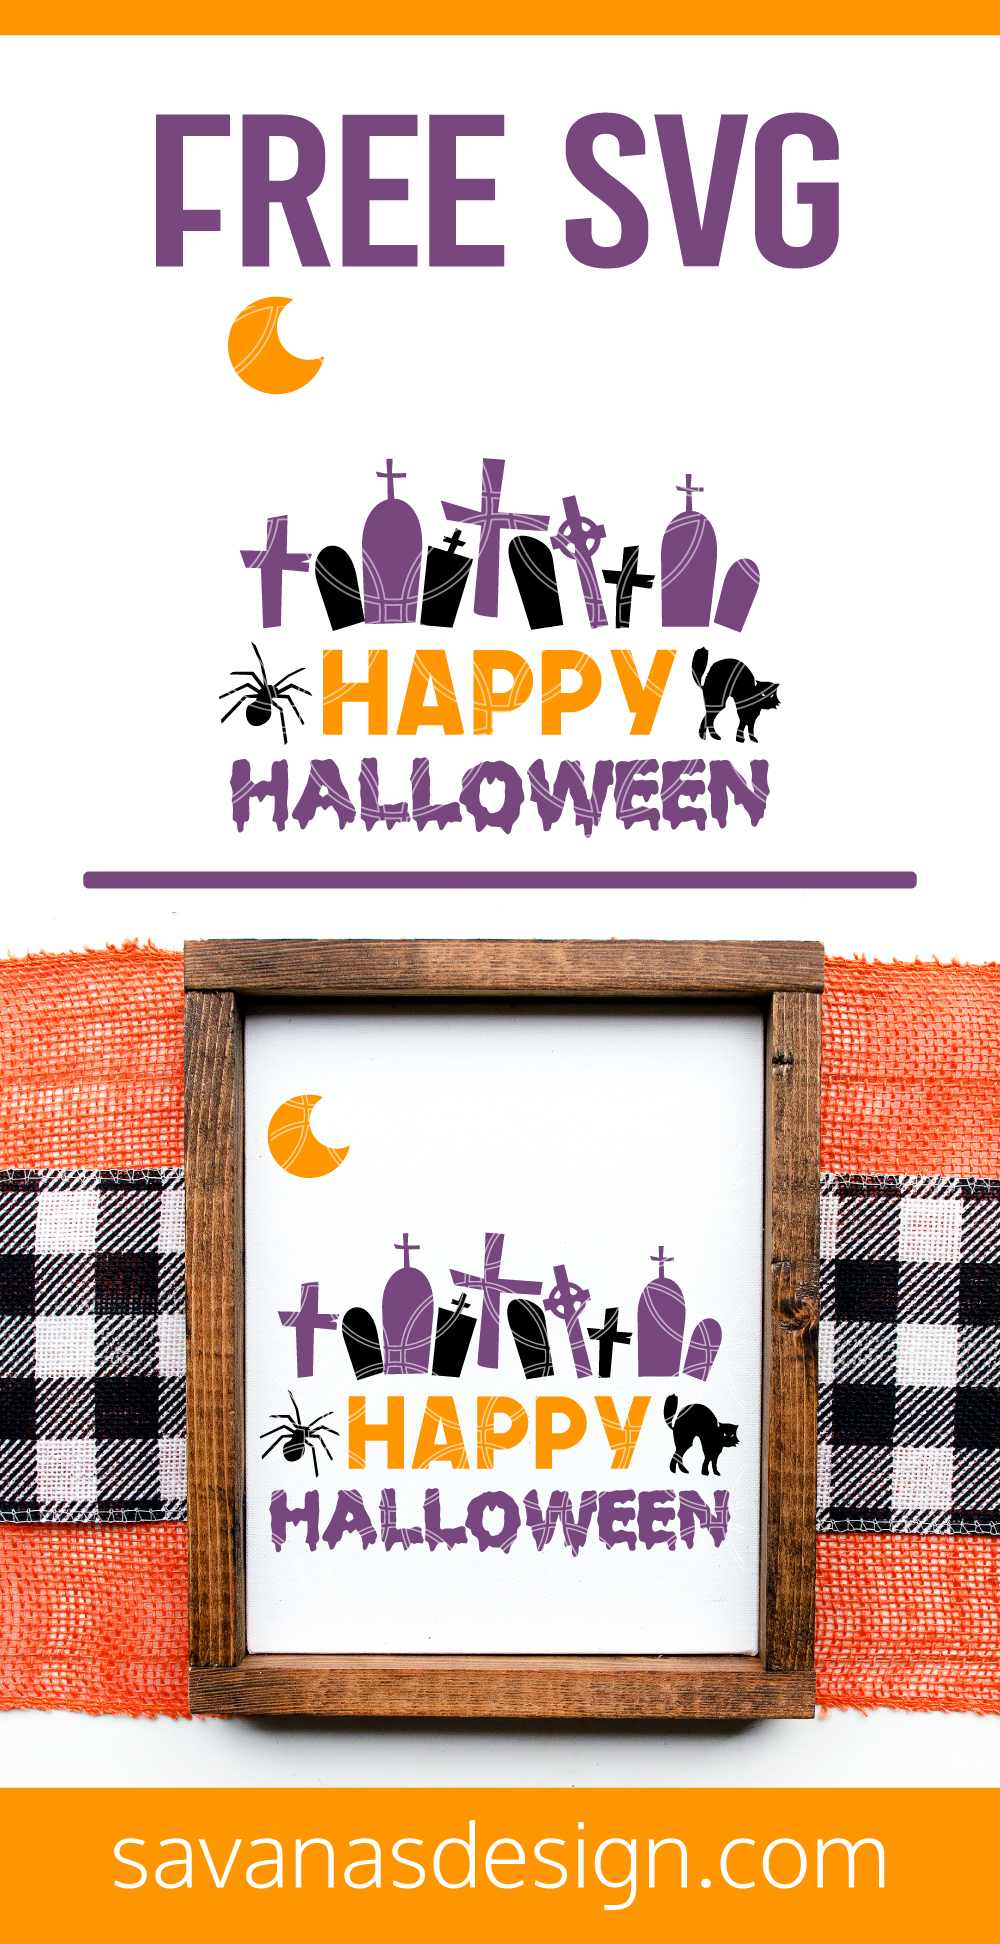 Happy Halloween SVG Pinterest